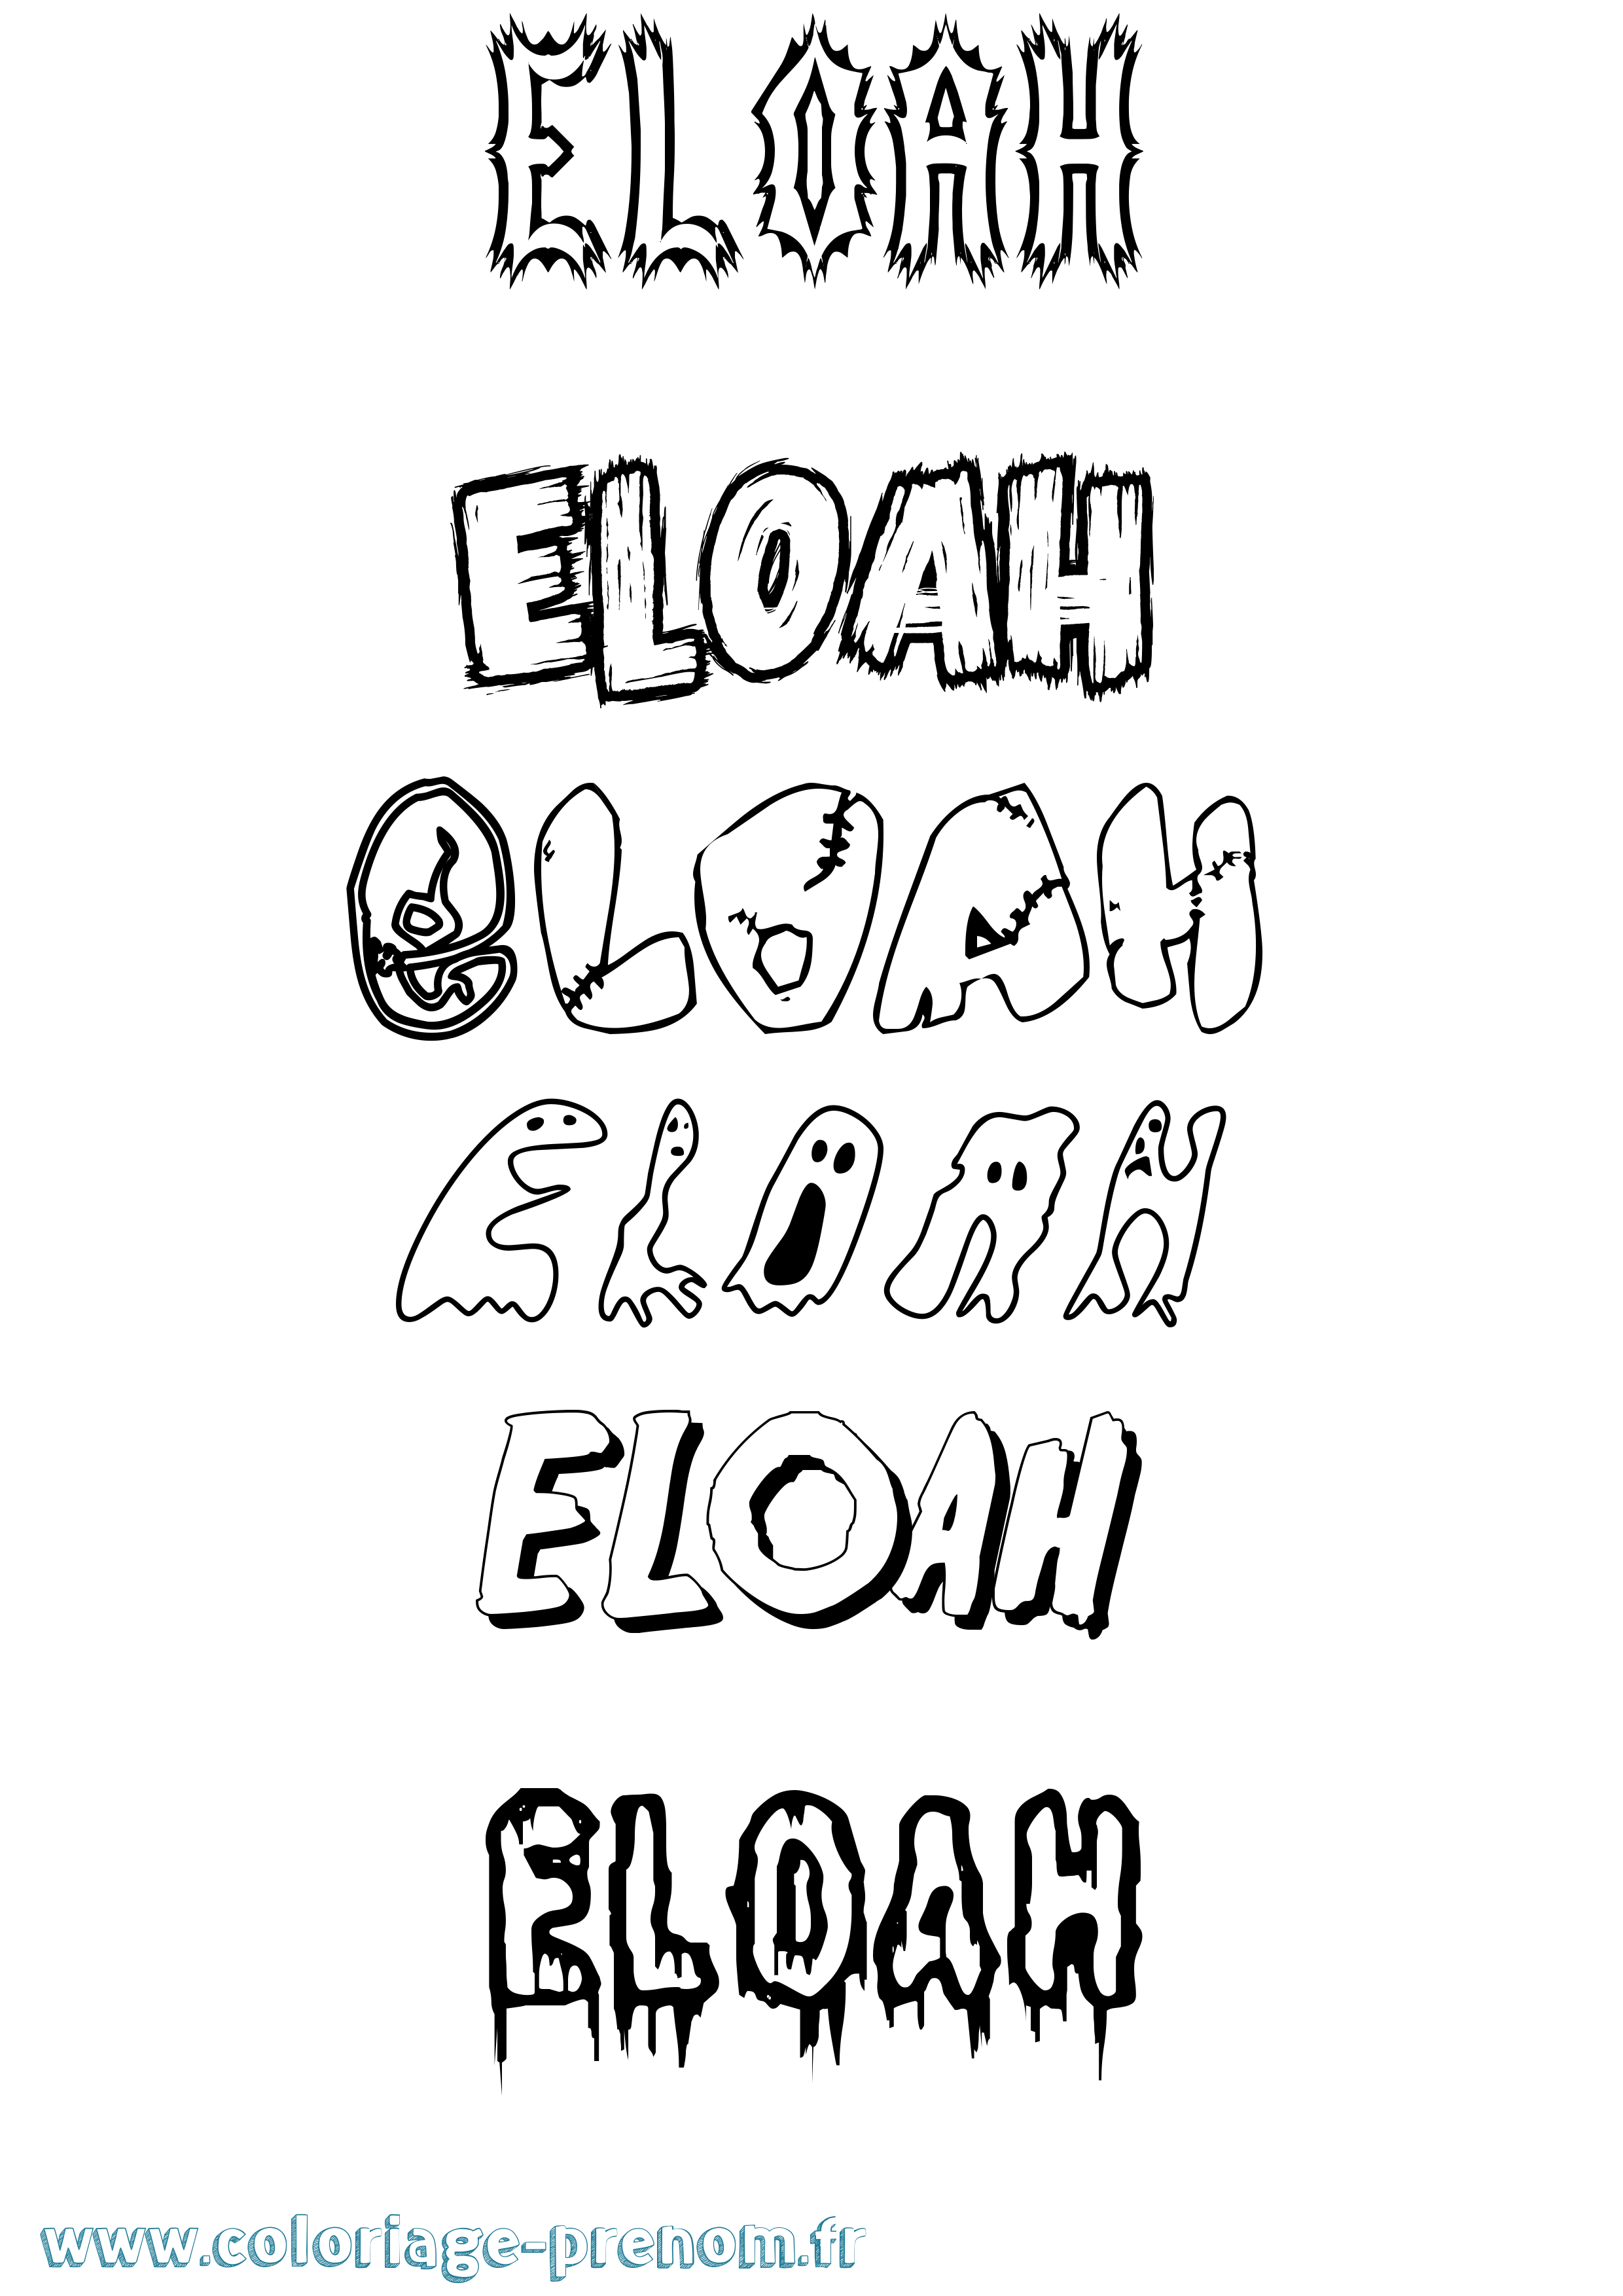 Coloriage prénom Eloah Frisson